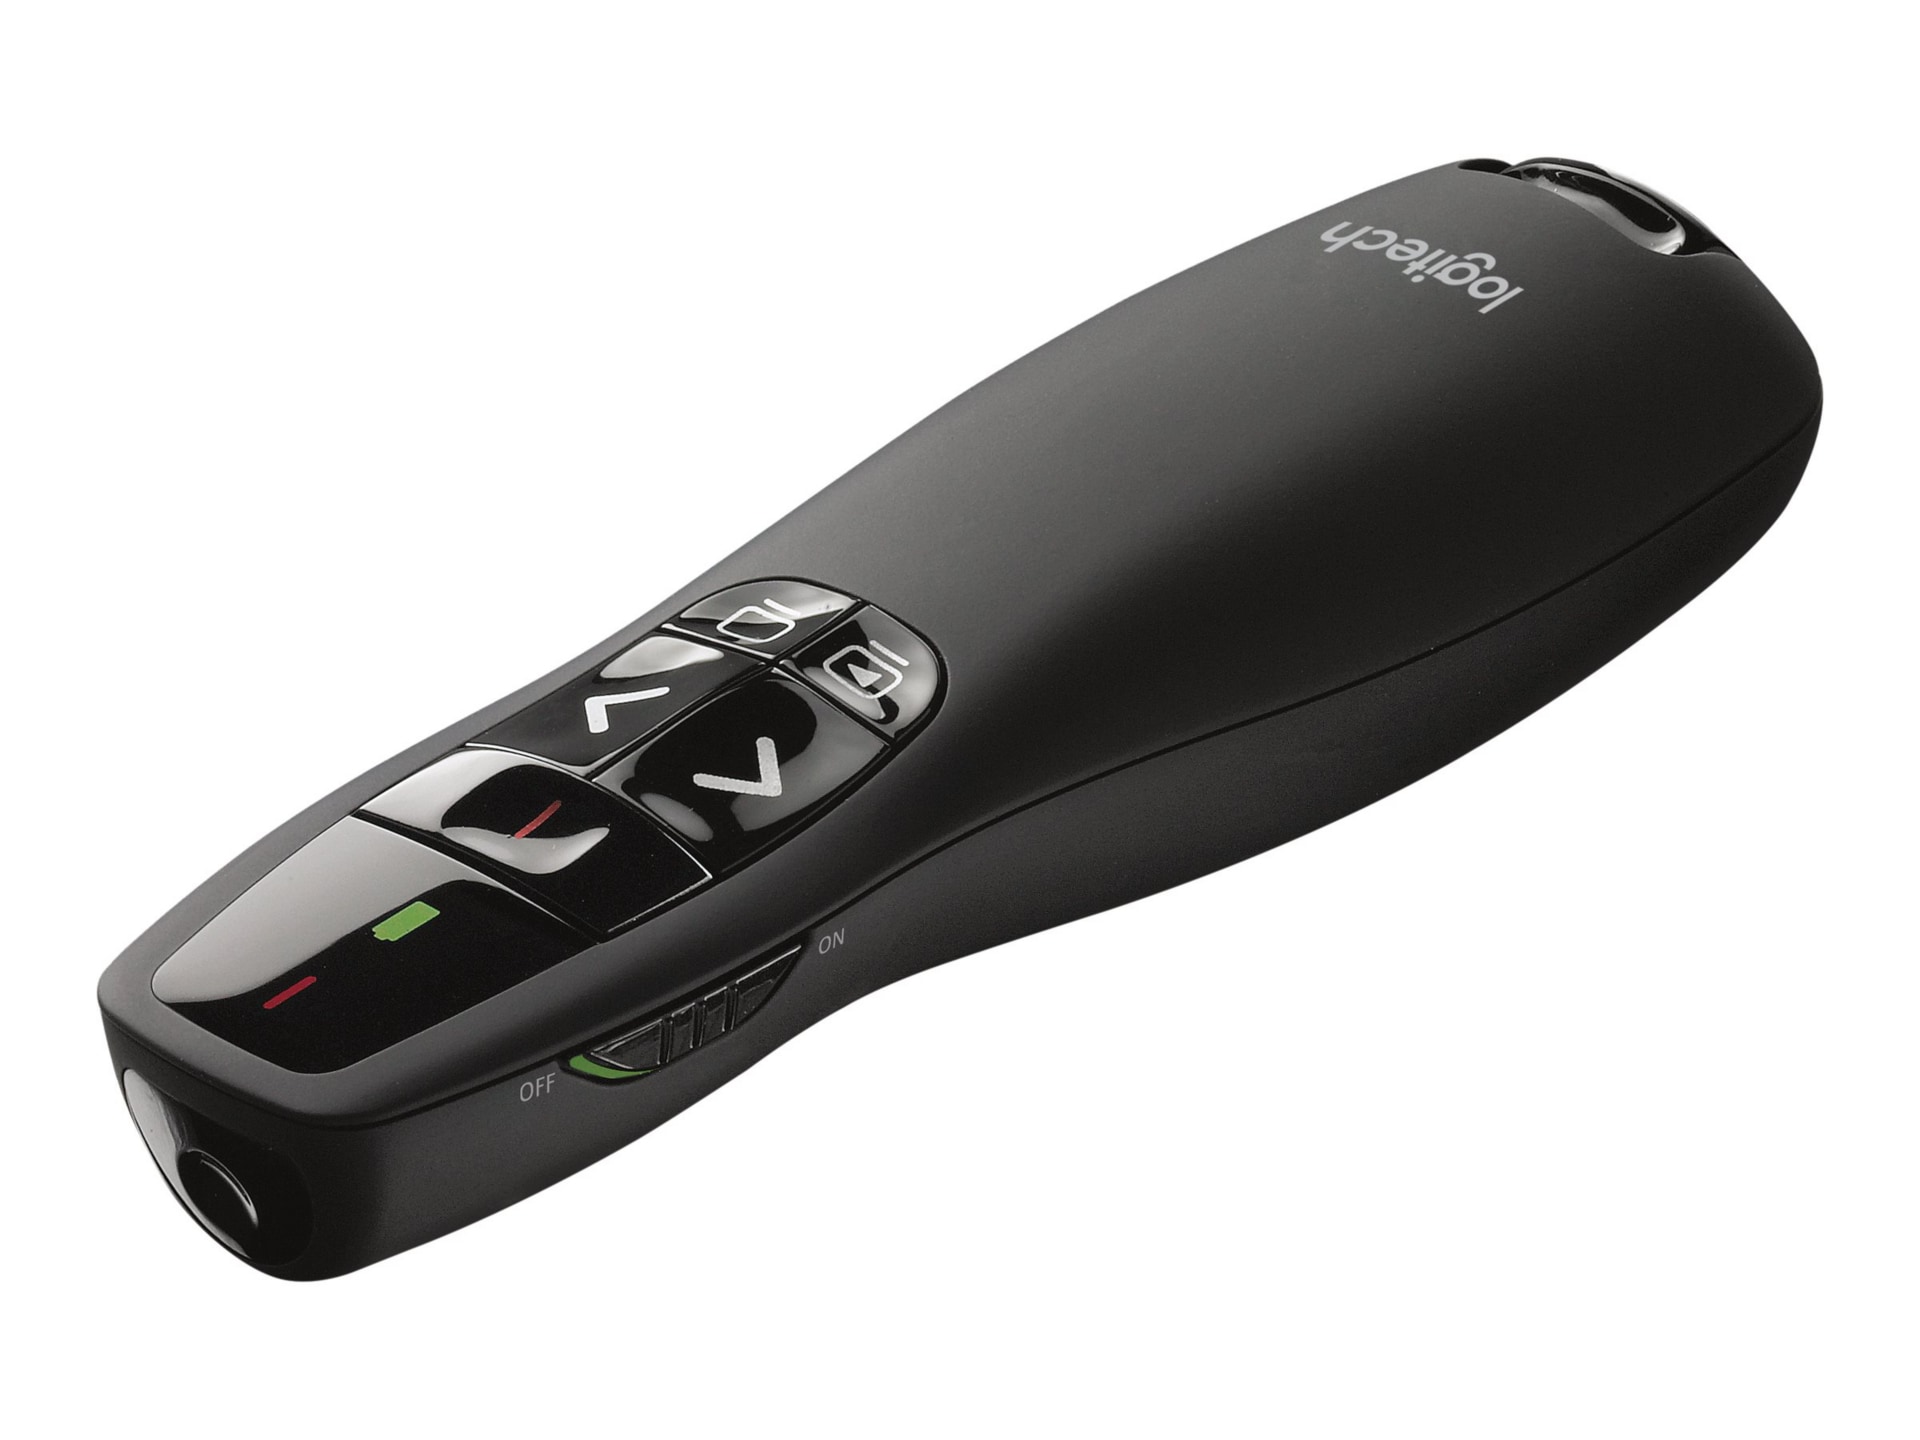 Logitech Wireless Presenter R400 presentation remote control